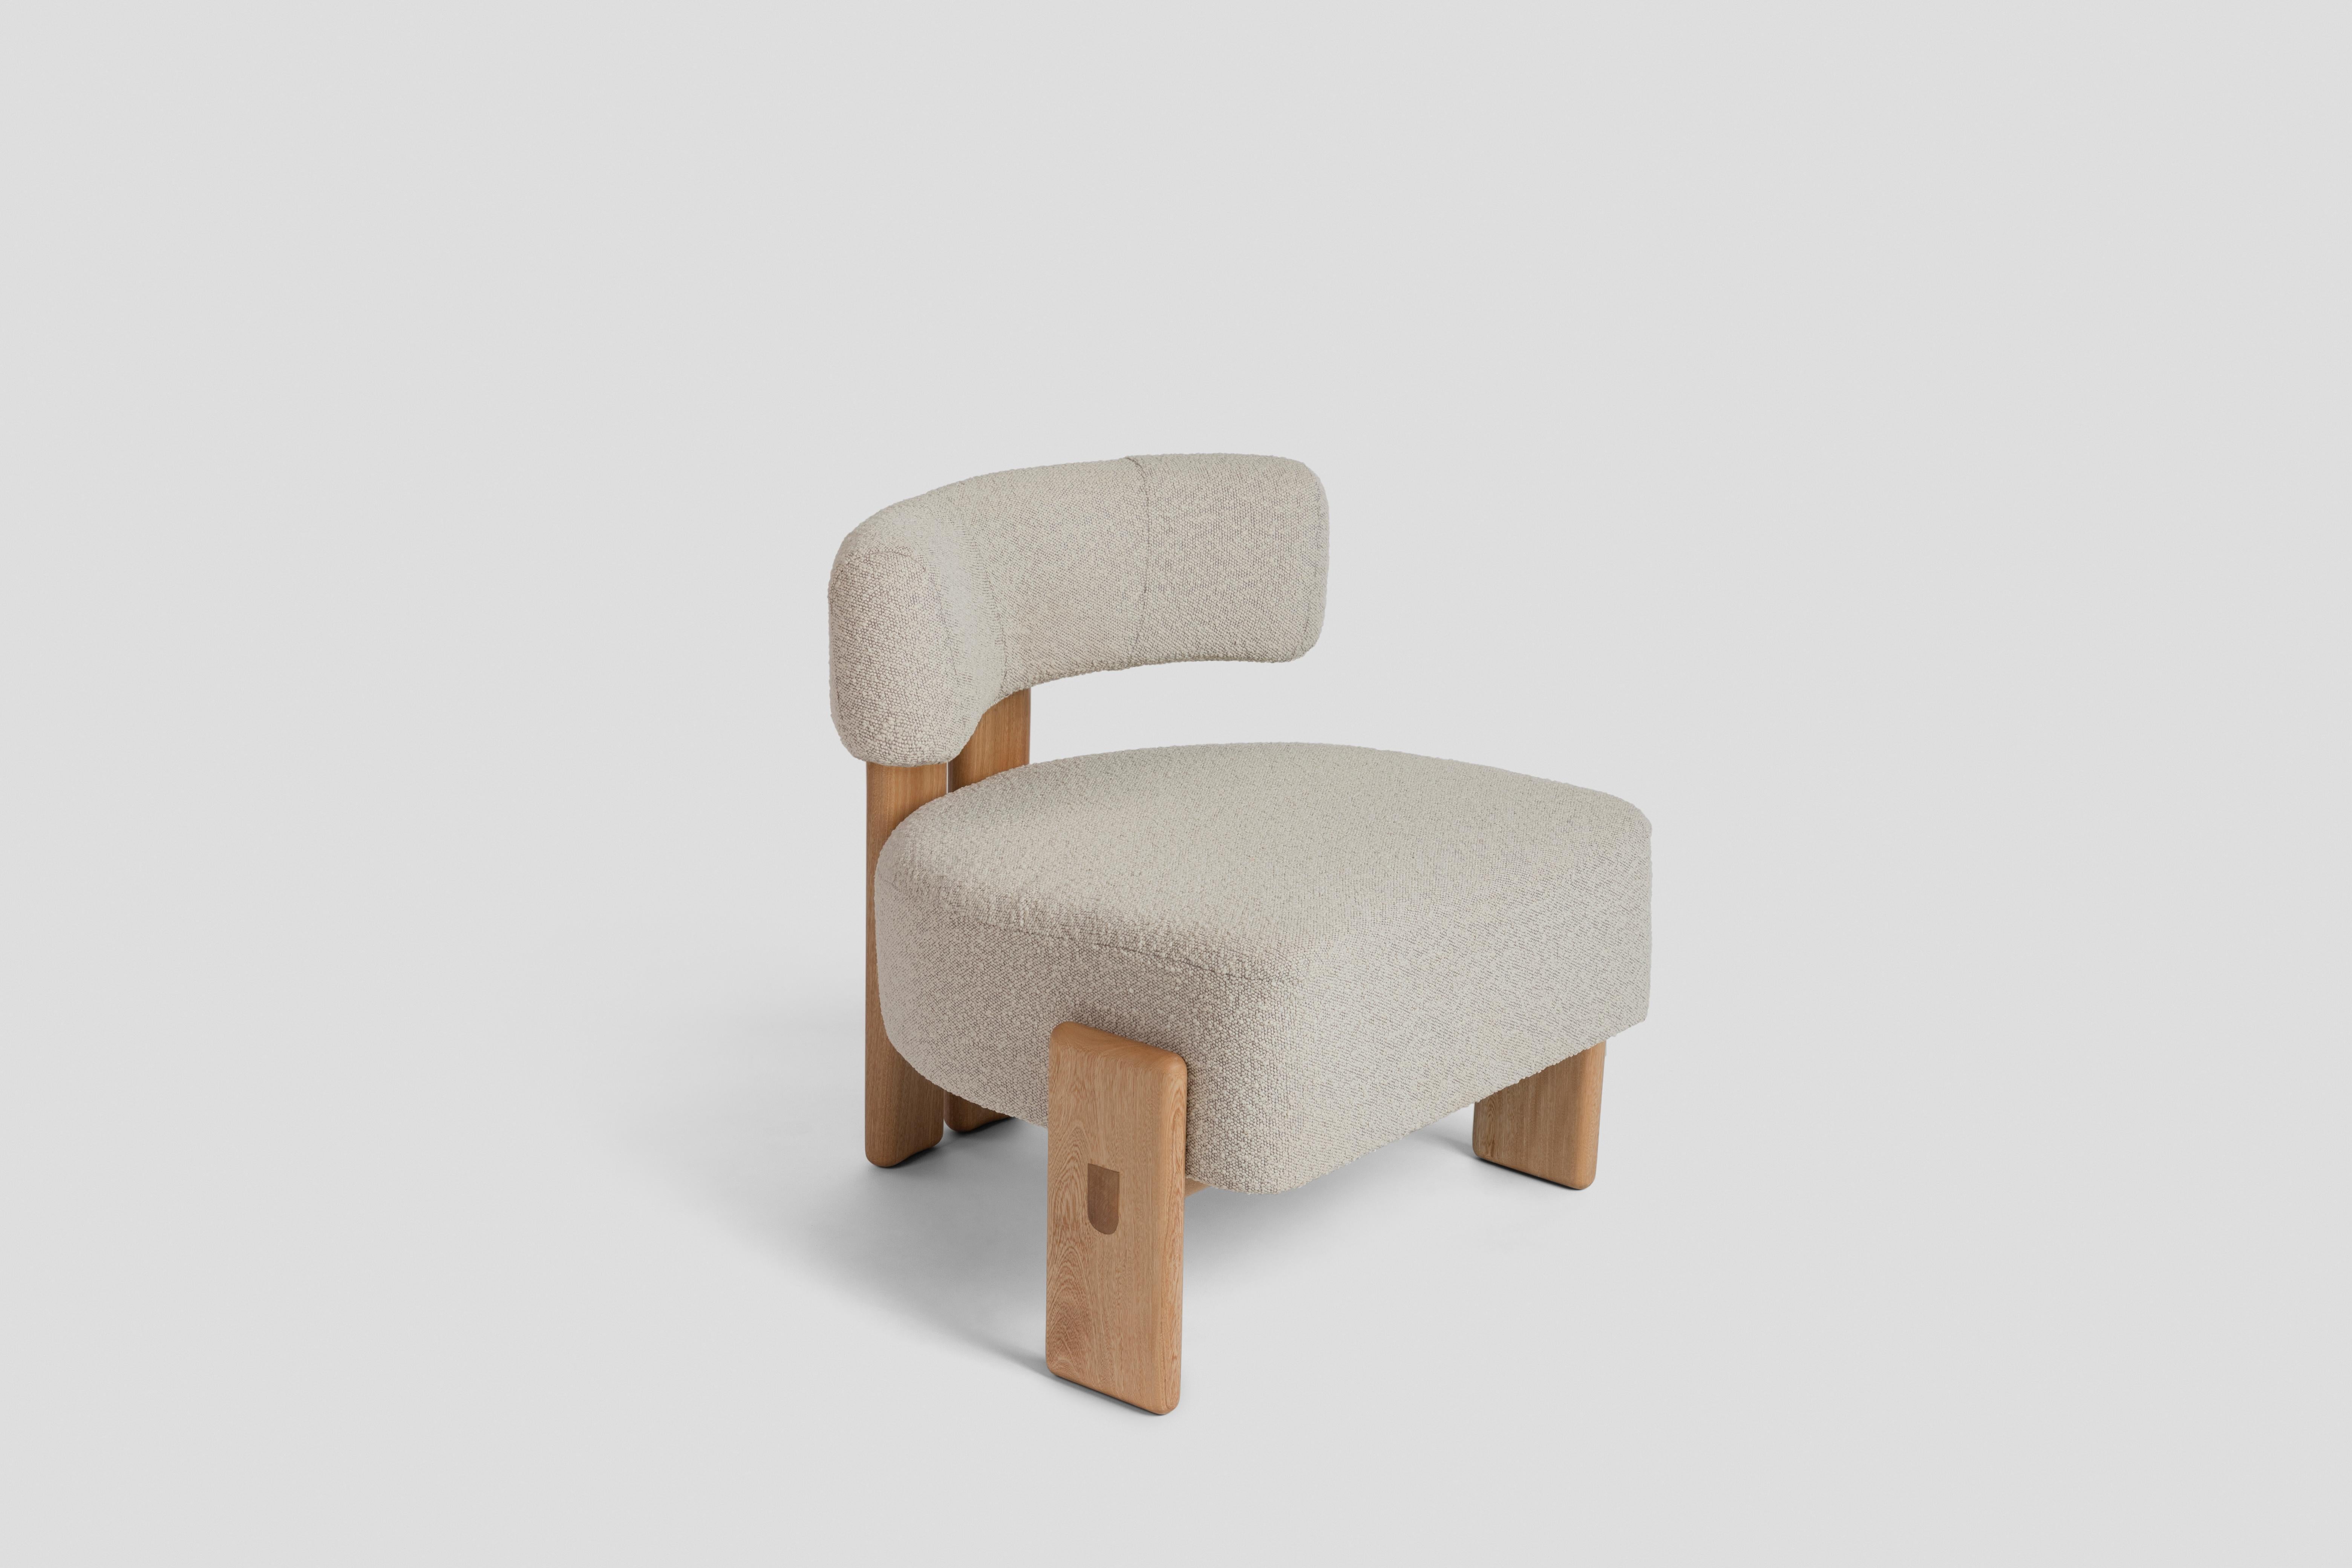 De la Paz Low Chair Solid Wood COM, Contemporary Mexican Design 2